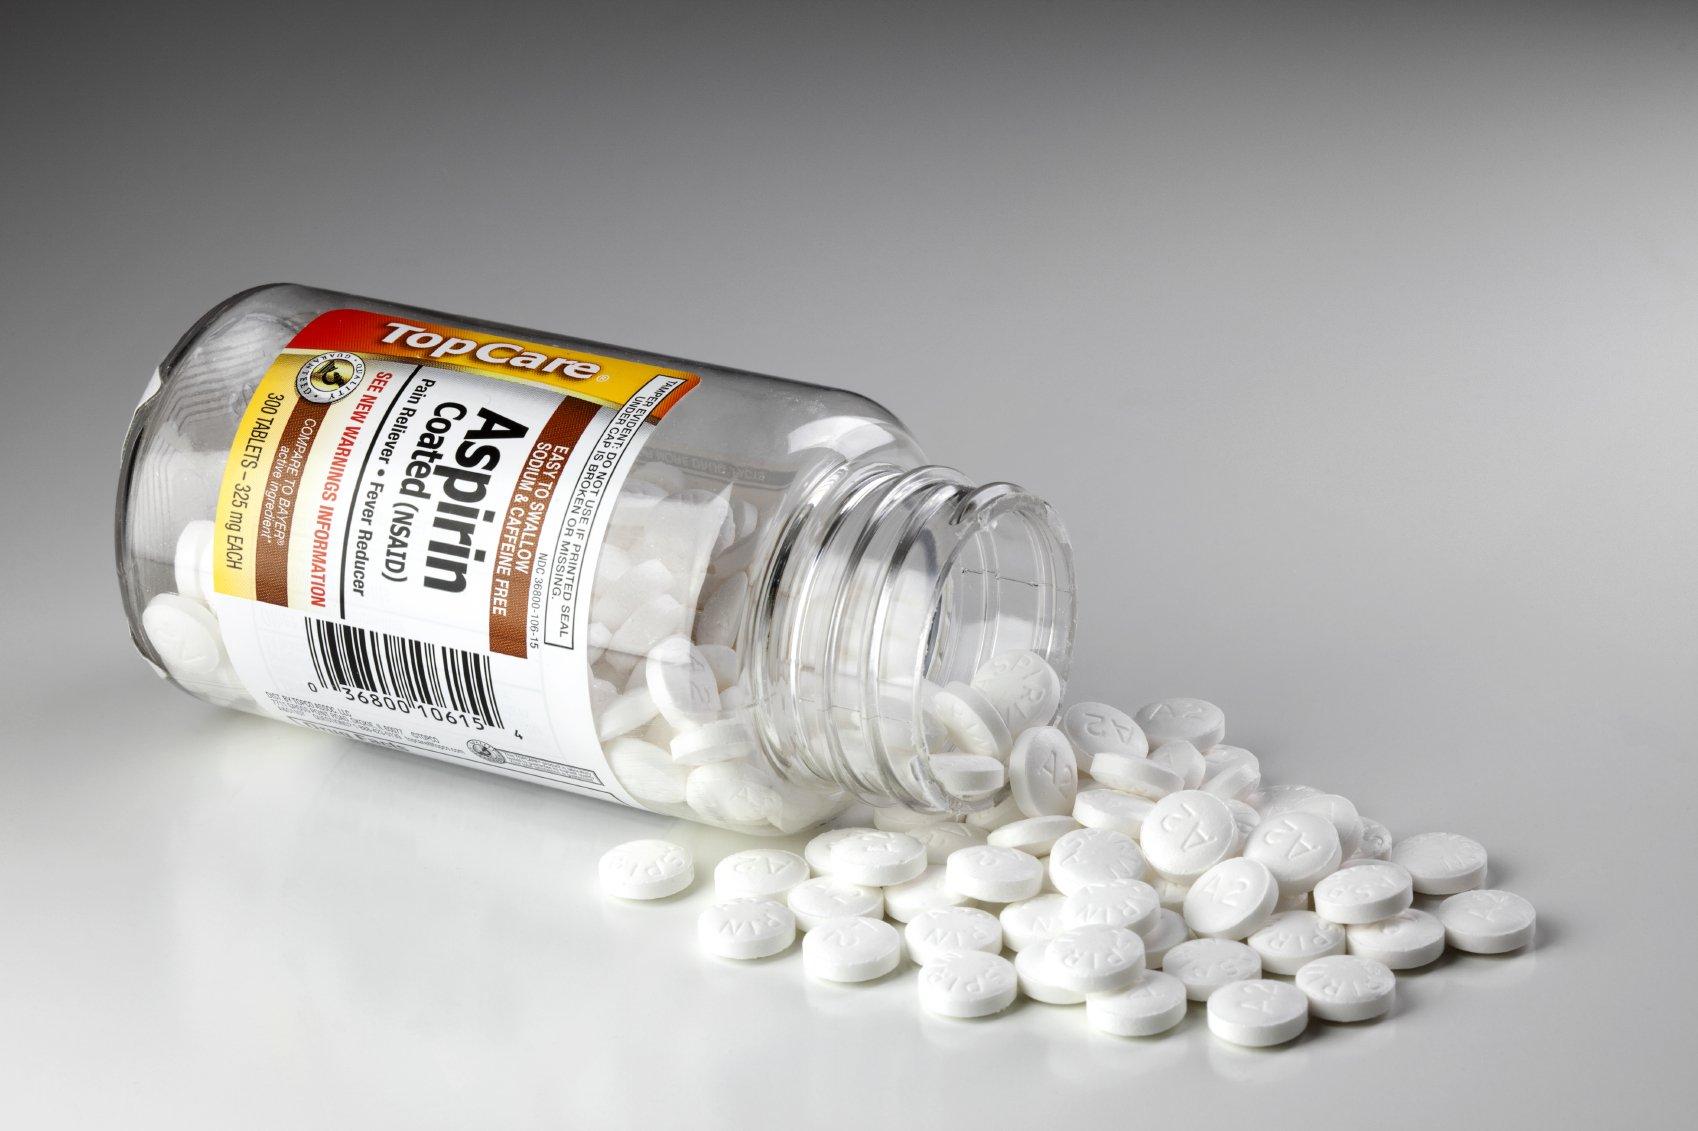 Аспирин снижает риск рака яичника и рака печени